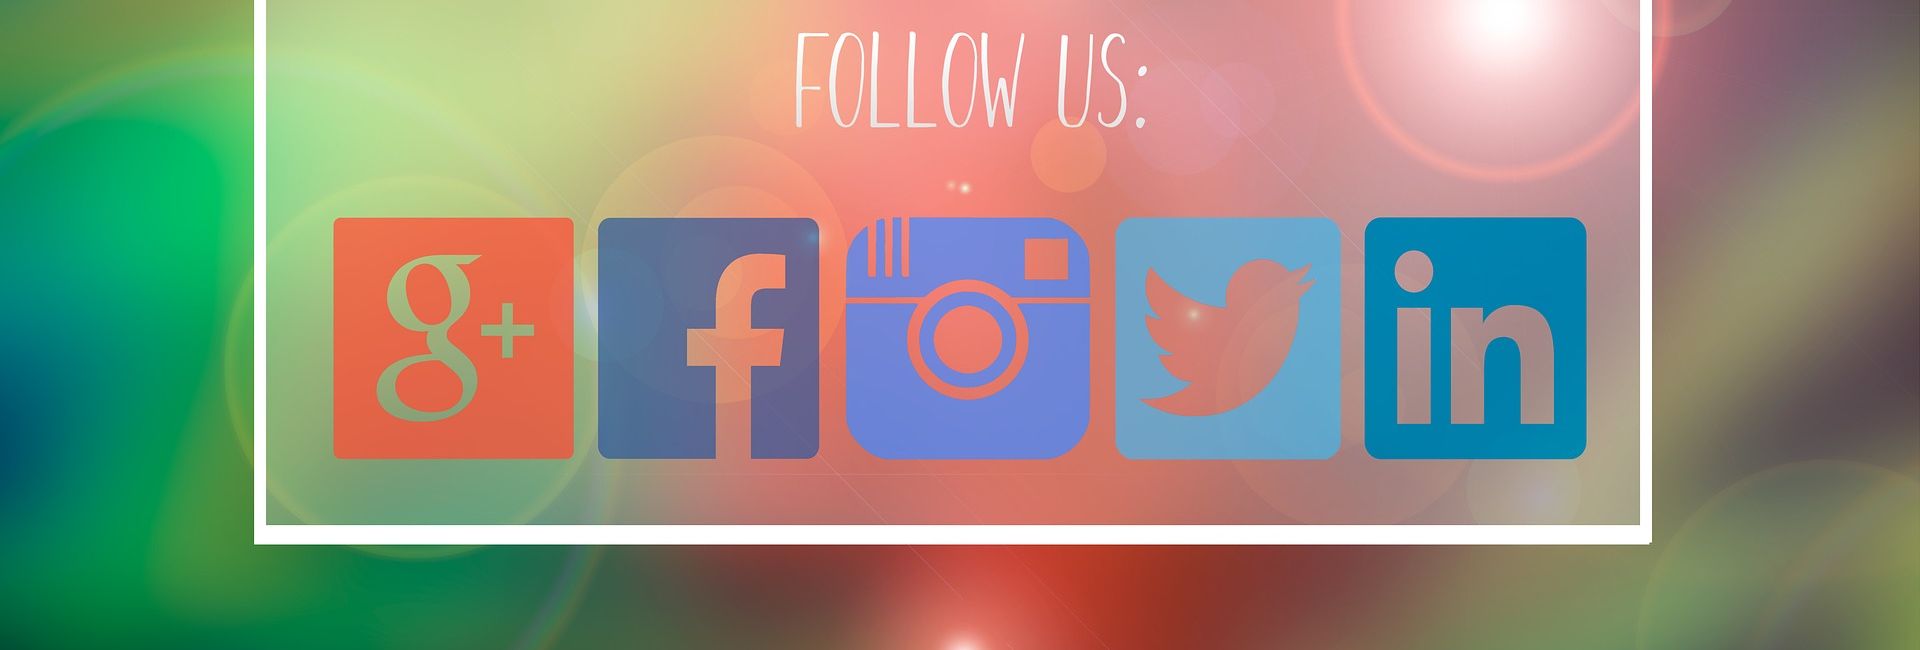 Port Douglas Australia Website Design Social Media